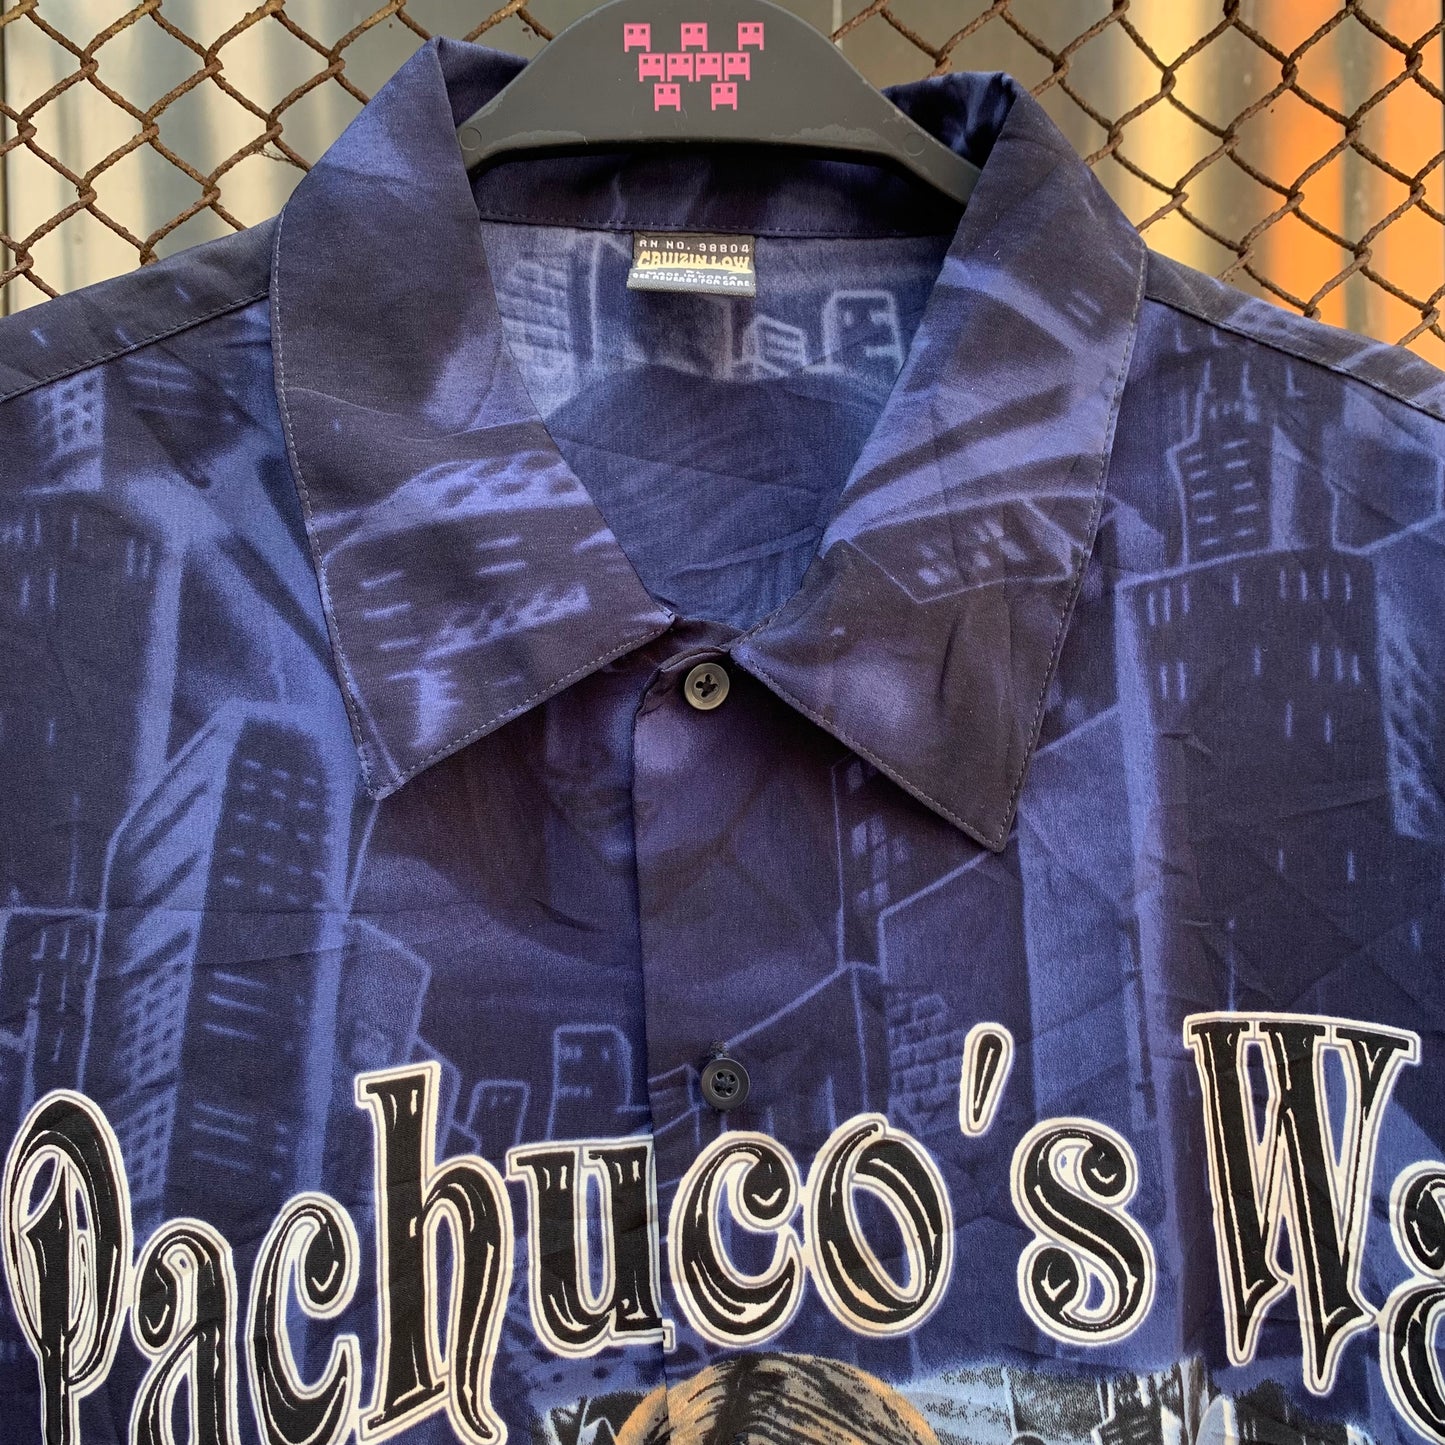 Pachuca's Way Short Sleeves Shirt